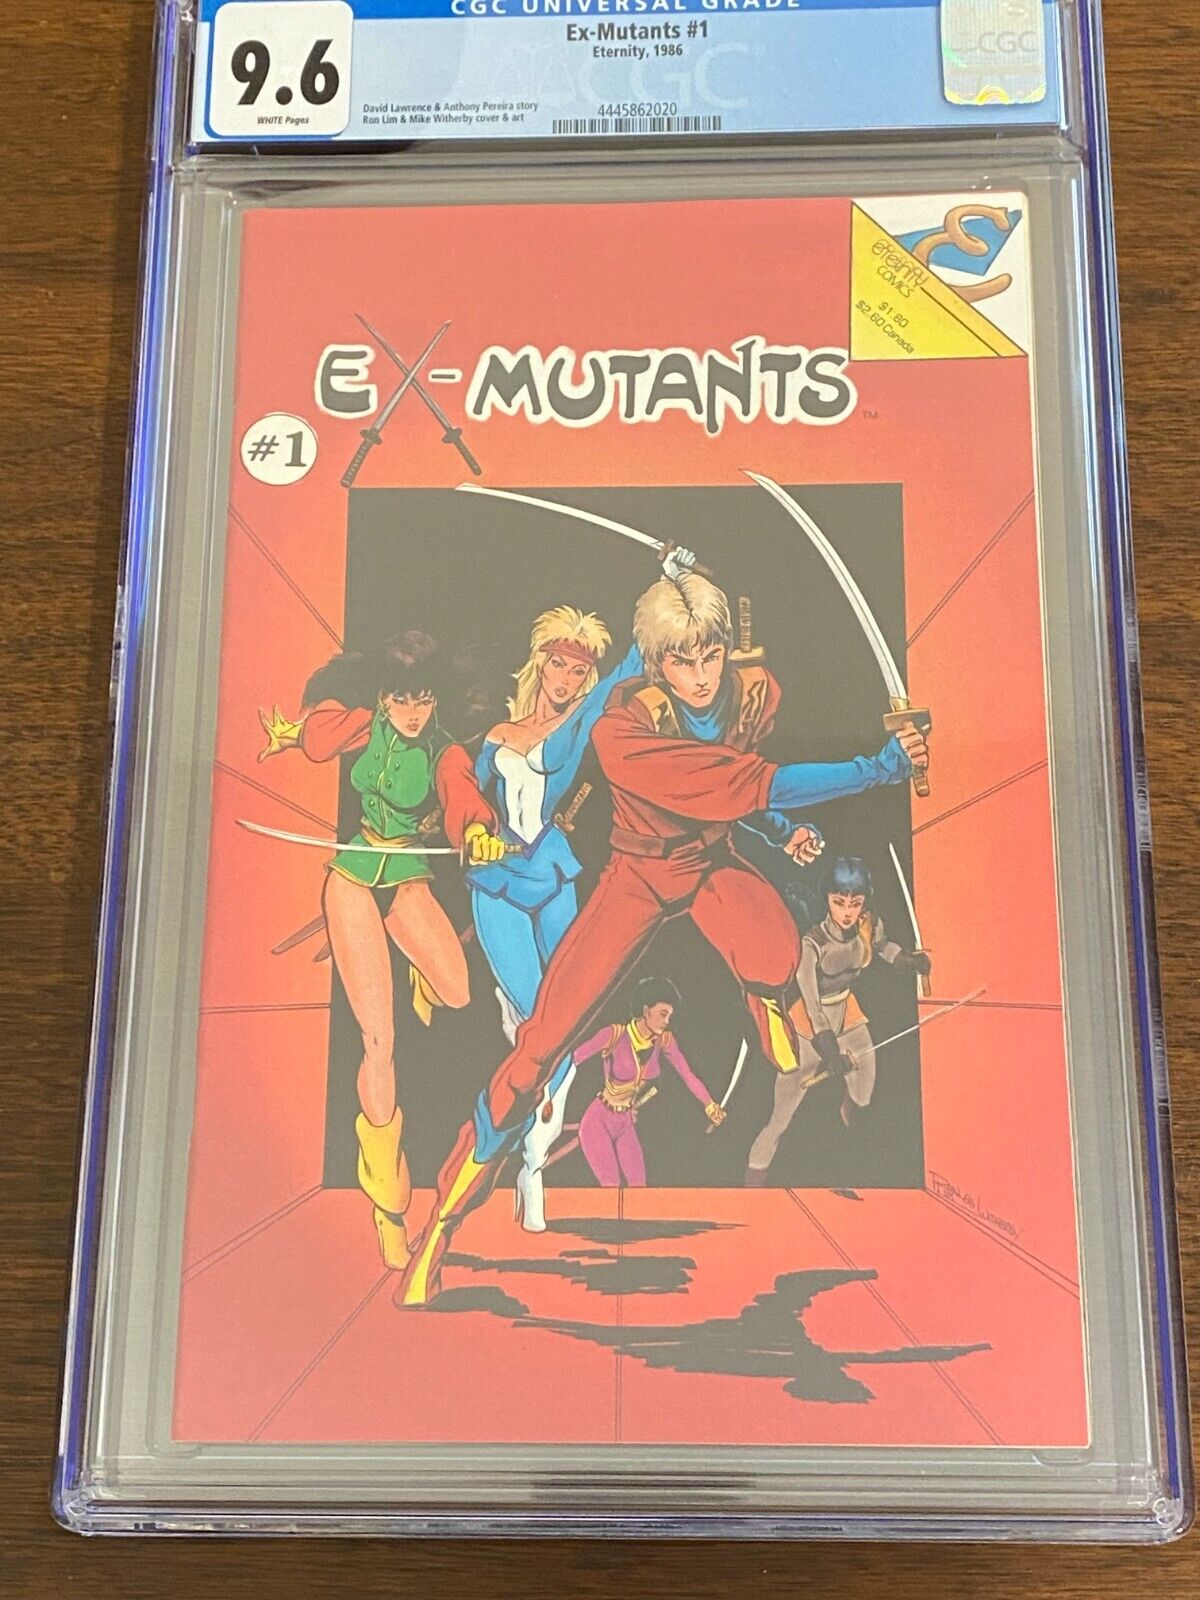 Ex-Mutants #1 1986 CGC 9.6 Newly Graded